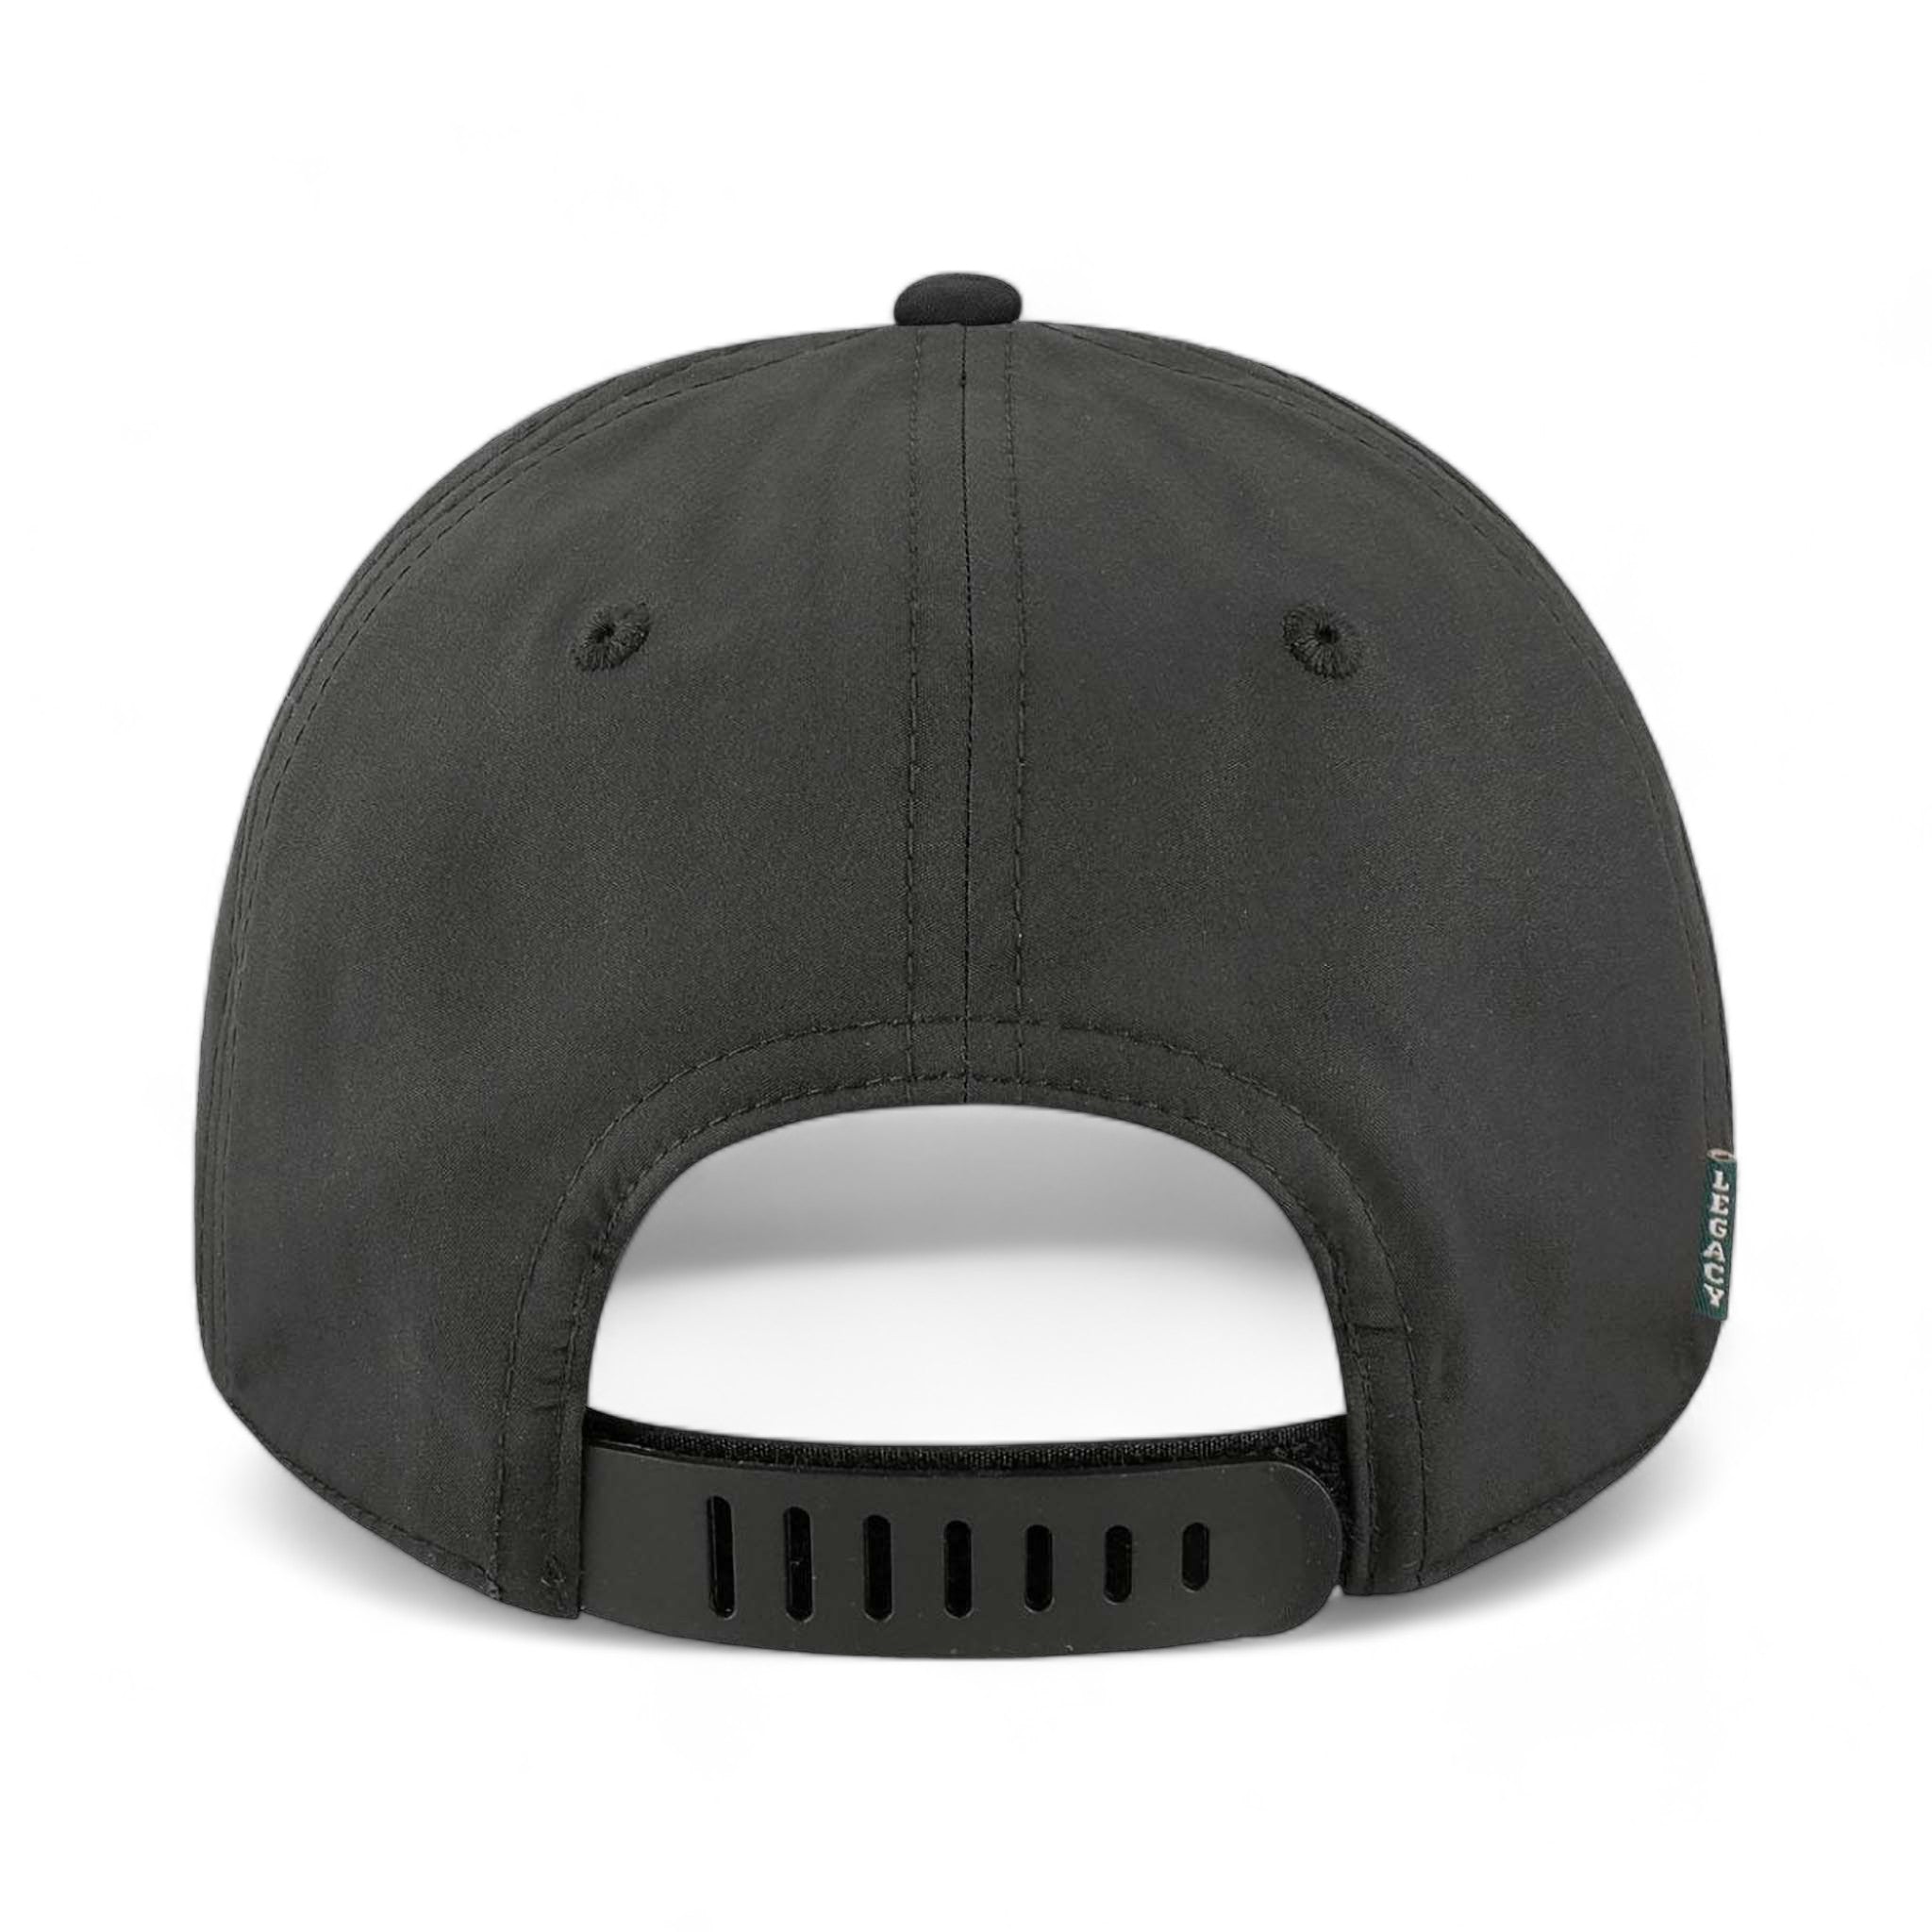 Back view of LEGACY B9A custom hat in black